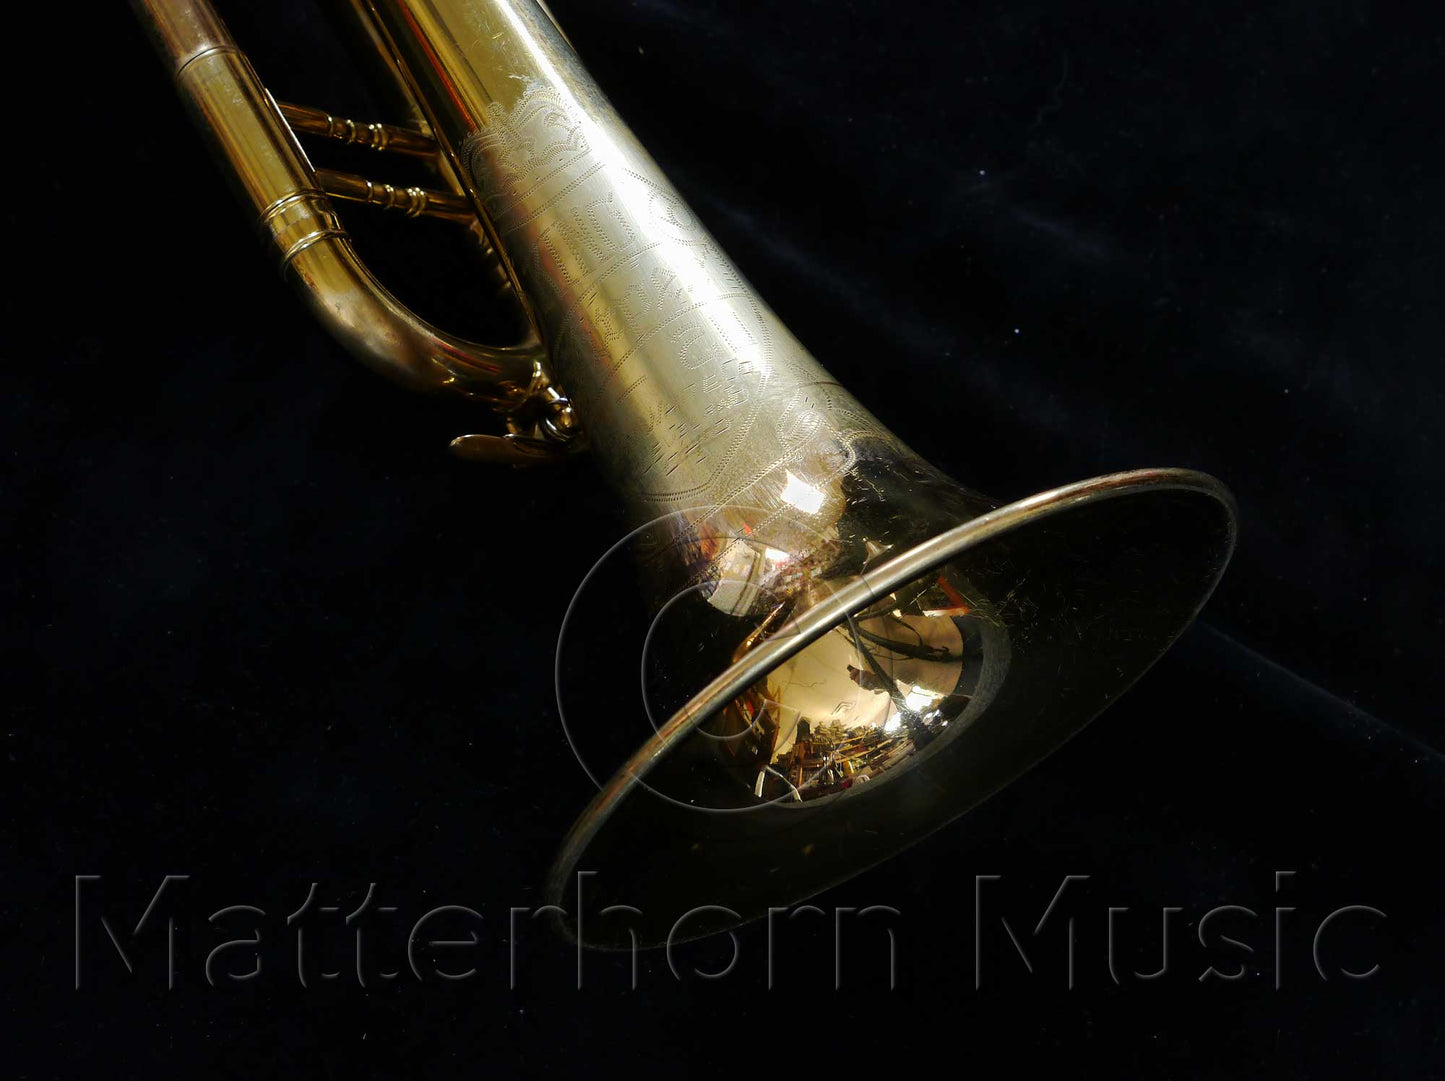 King Super 20 Trumpet